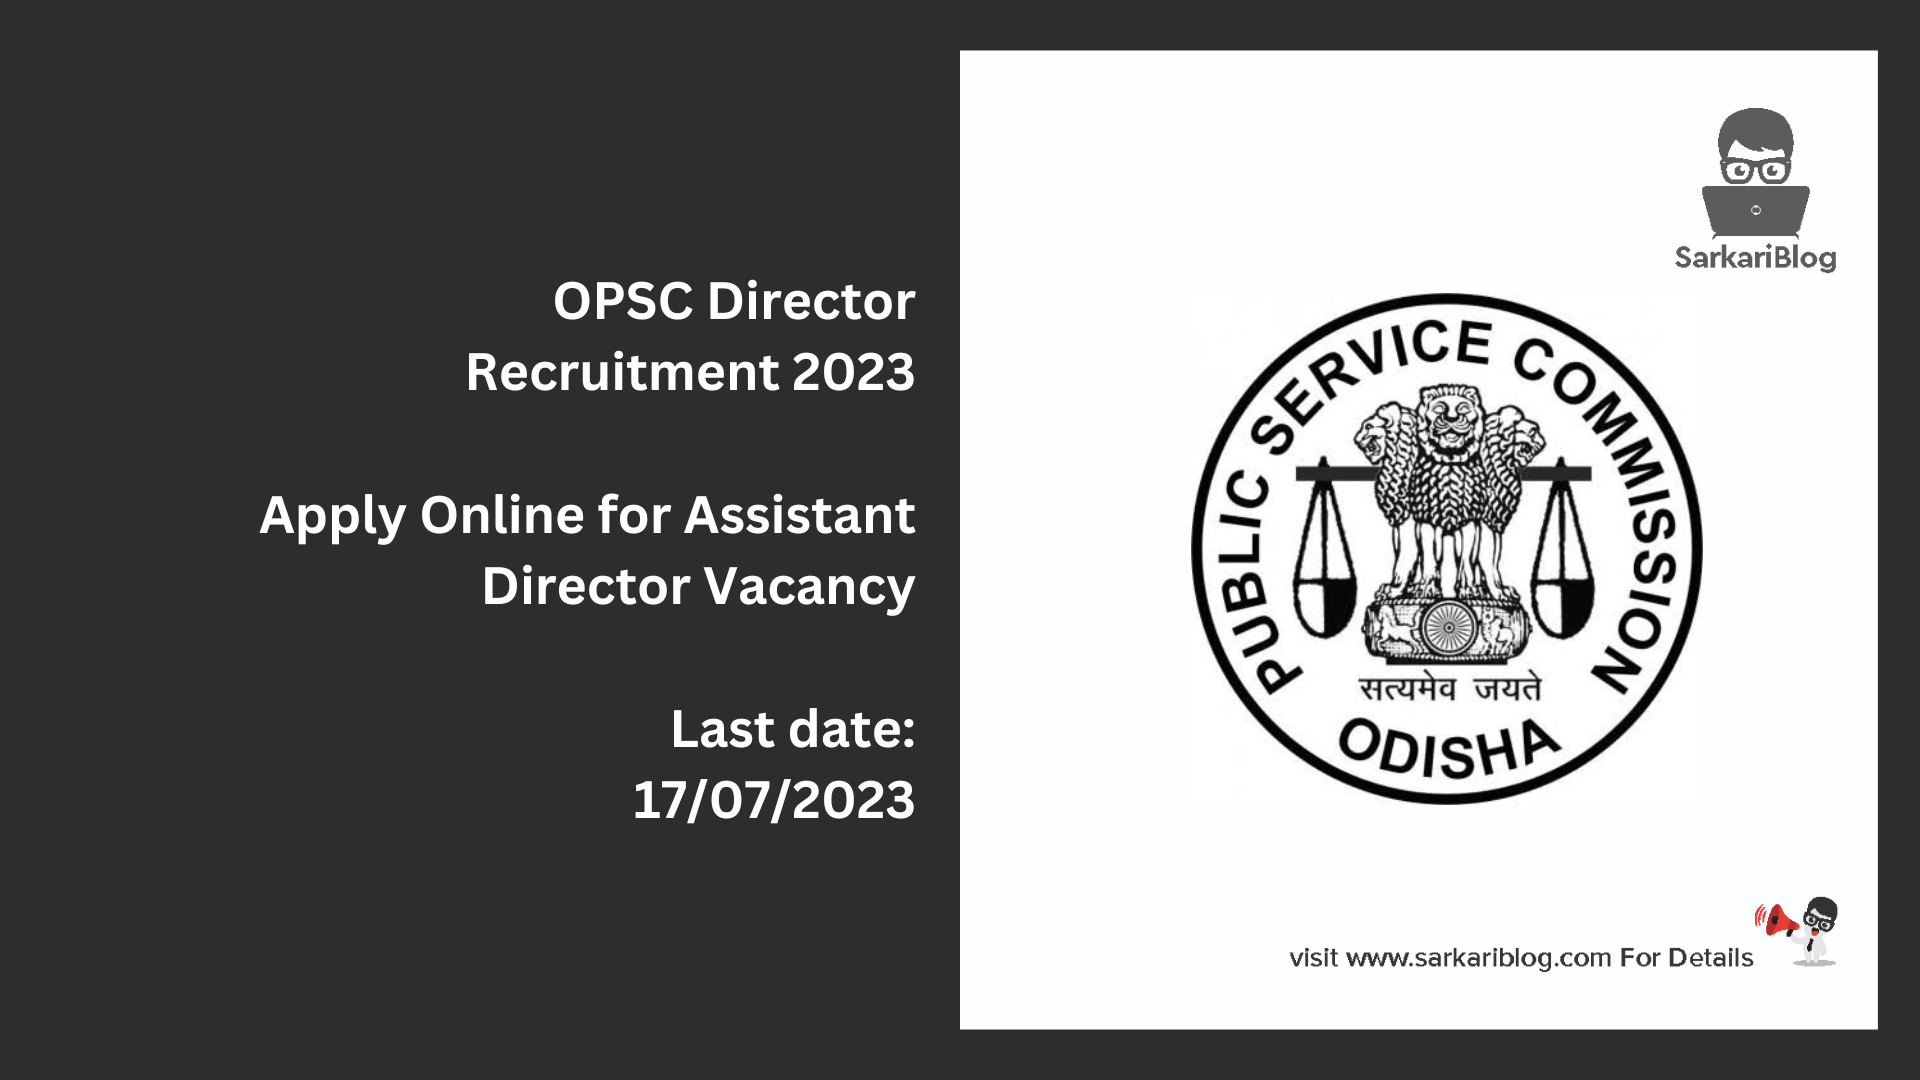 OPSC Director Recruitment 2023